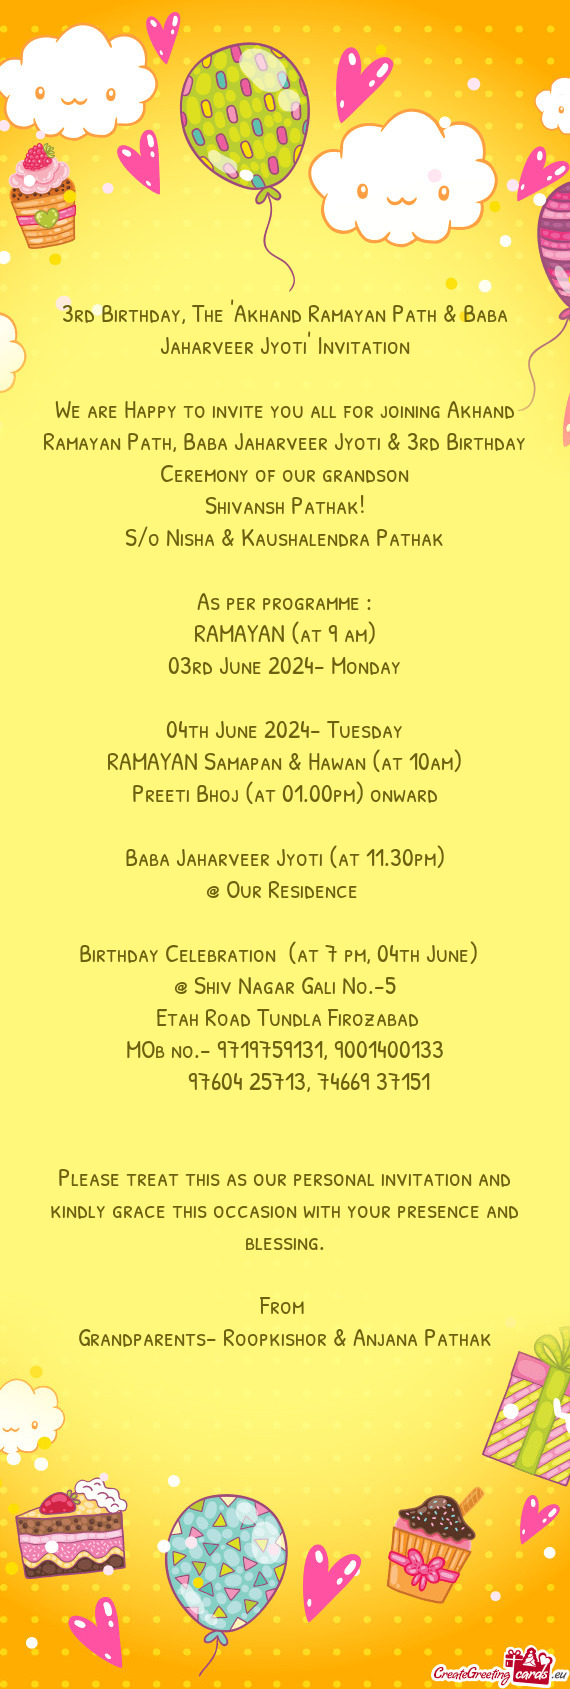 3rd Birthday, The "Akhand Ramayan Path & Baba Jaharveer Jyoti" Invitation